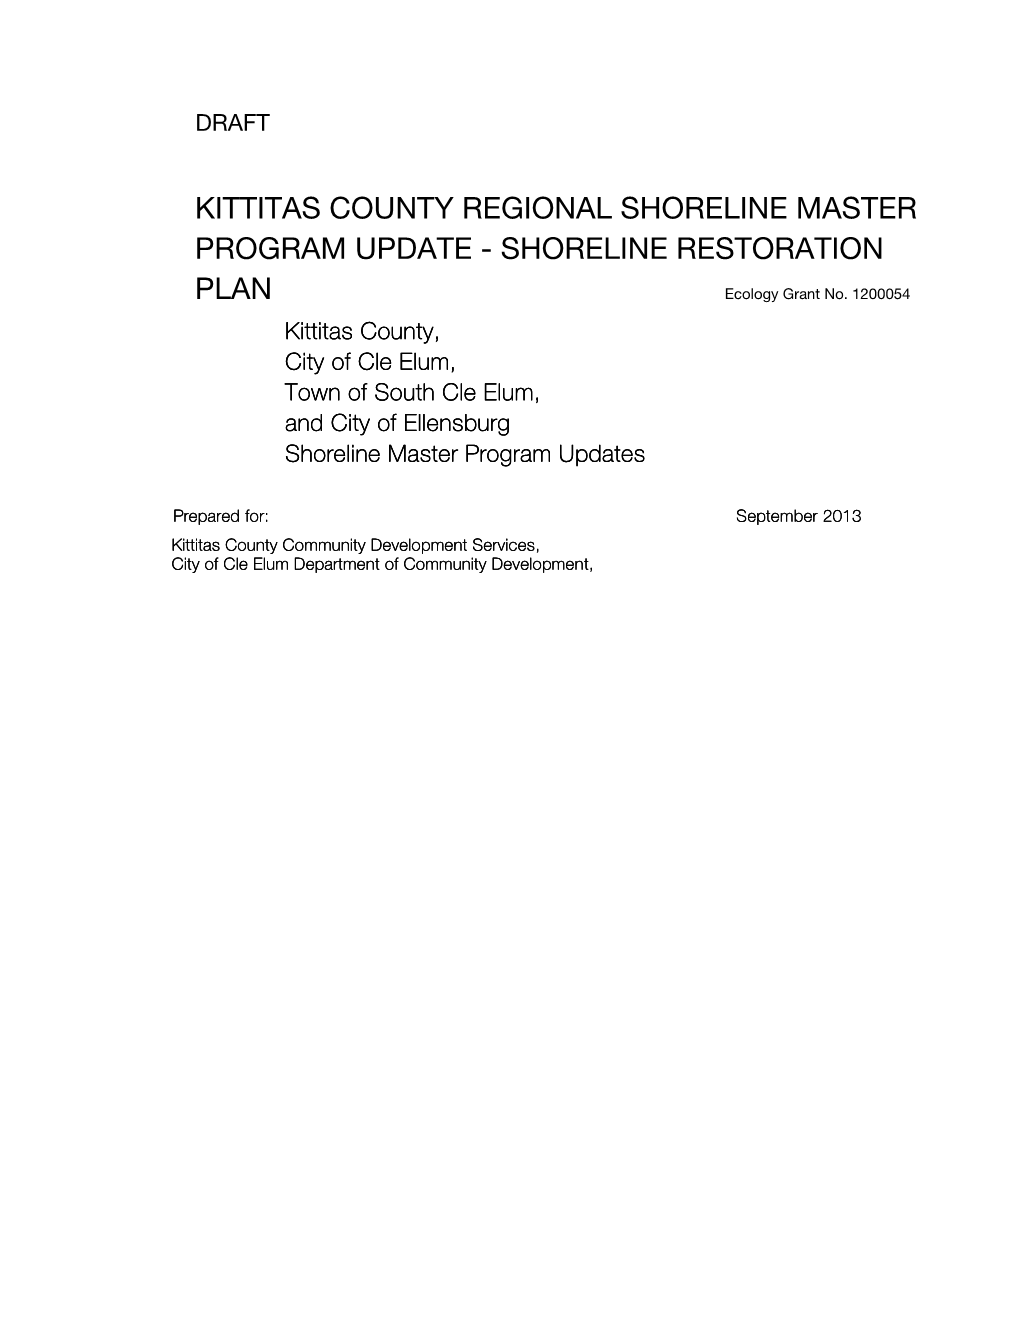 Kittitas County Regional Shoreline Master Program Update - Shoreline Restoration